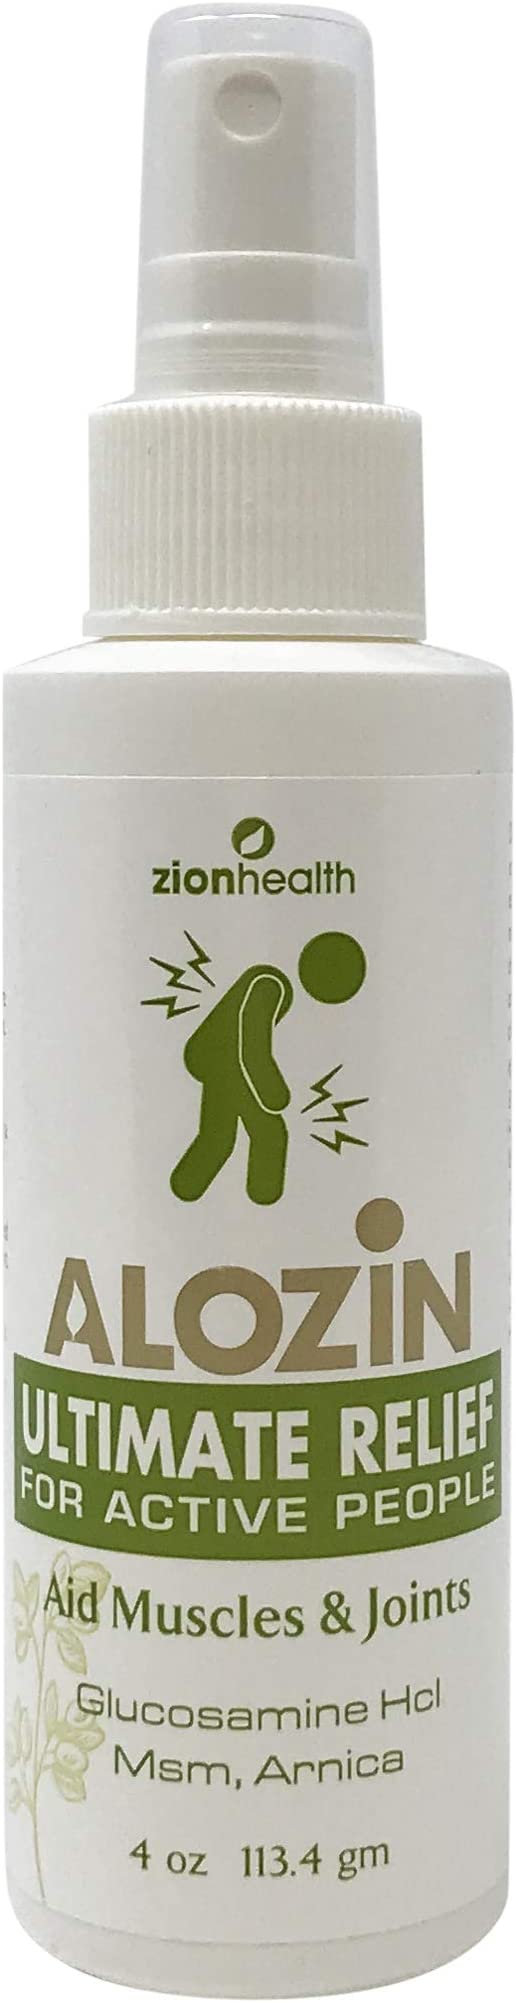 Alozin Pain Relief Spray Zion Health 4 oz Spray. Jump for Joy!